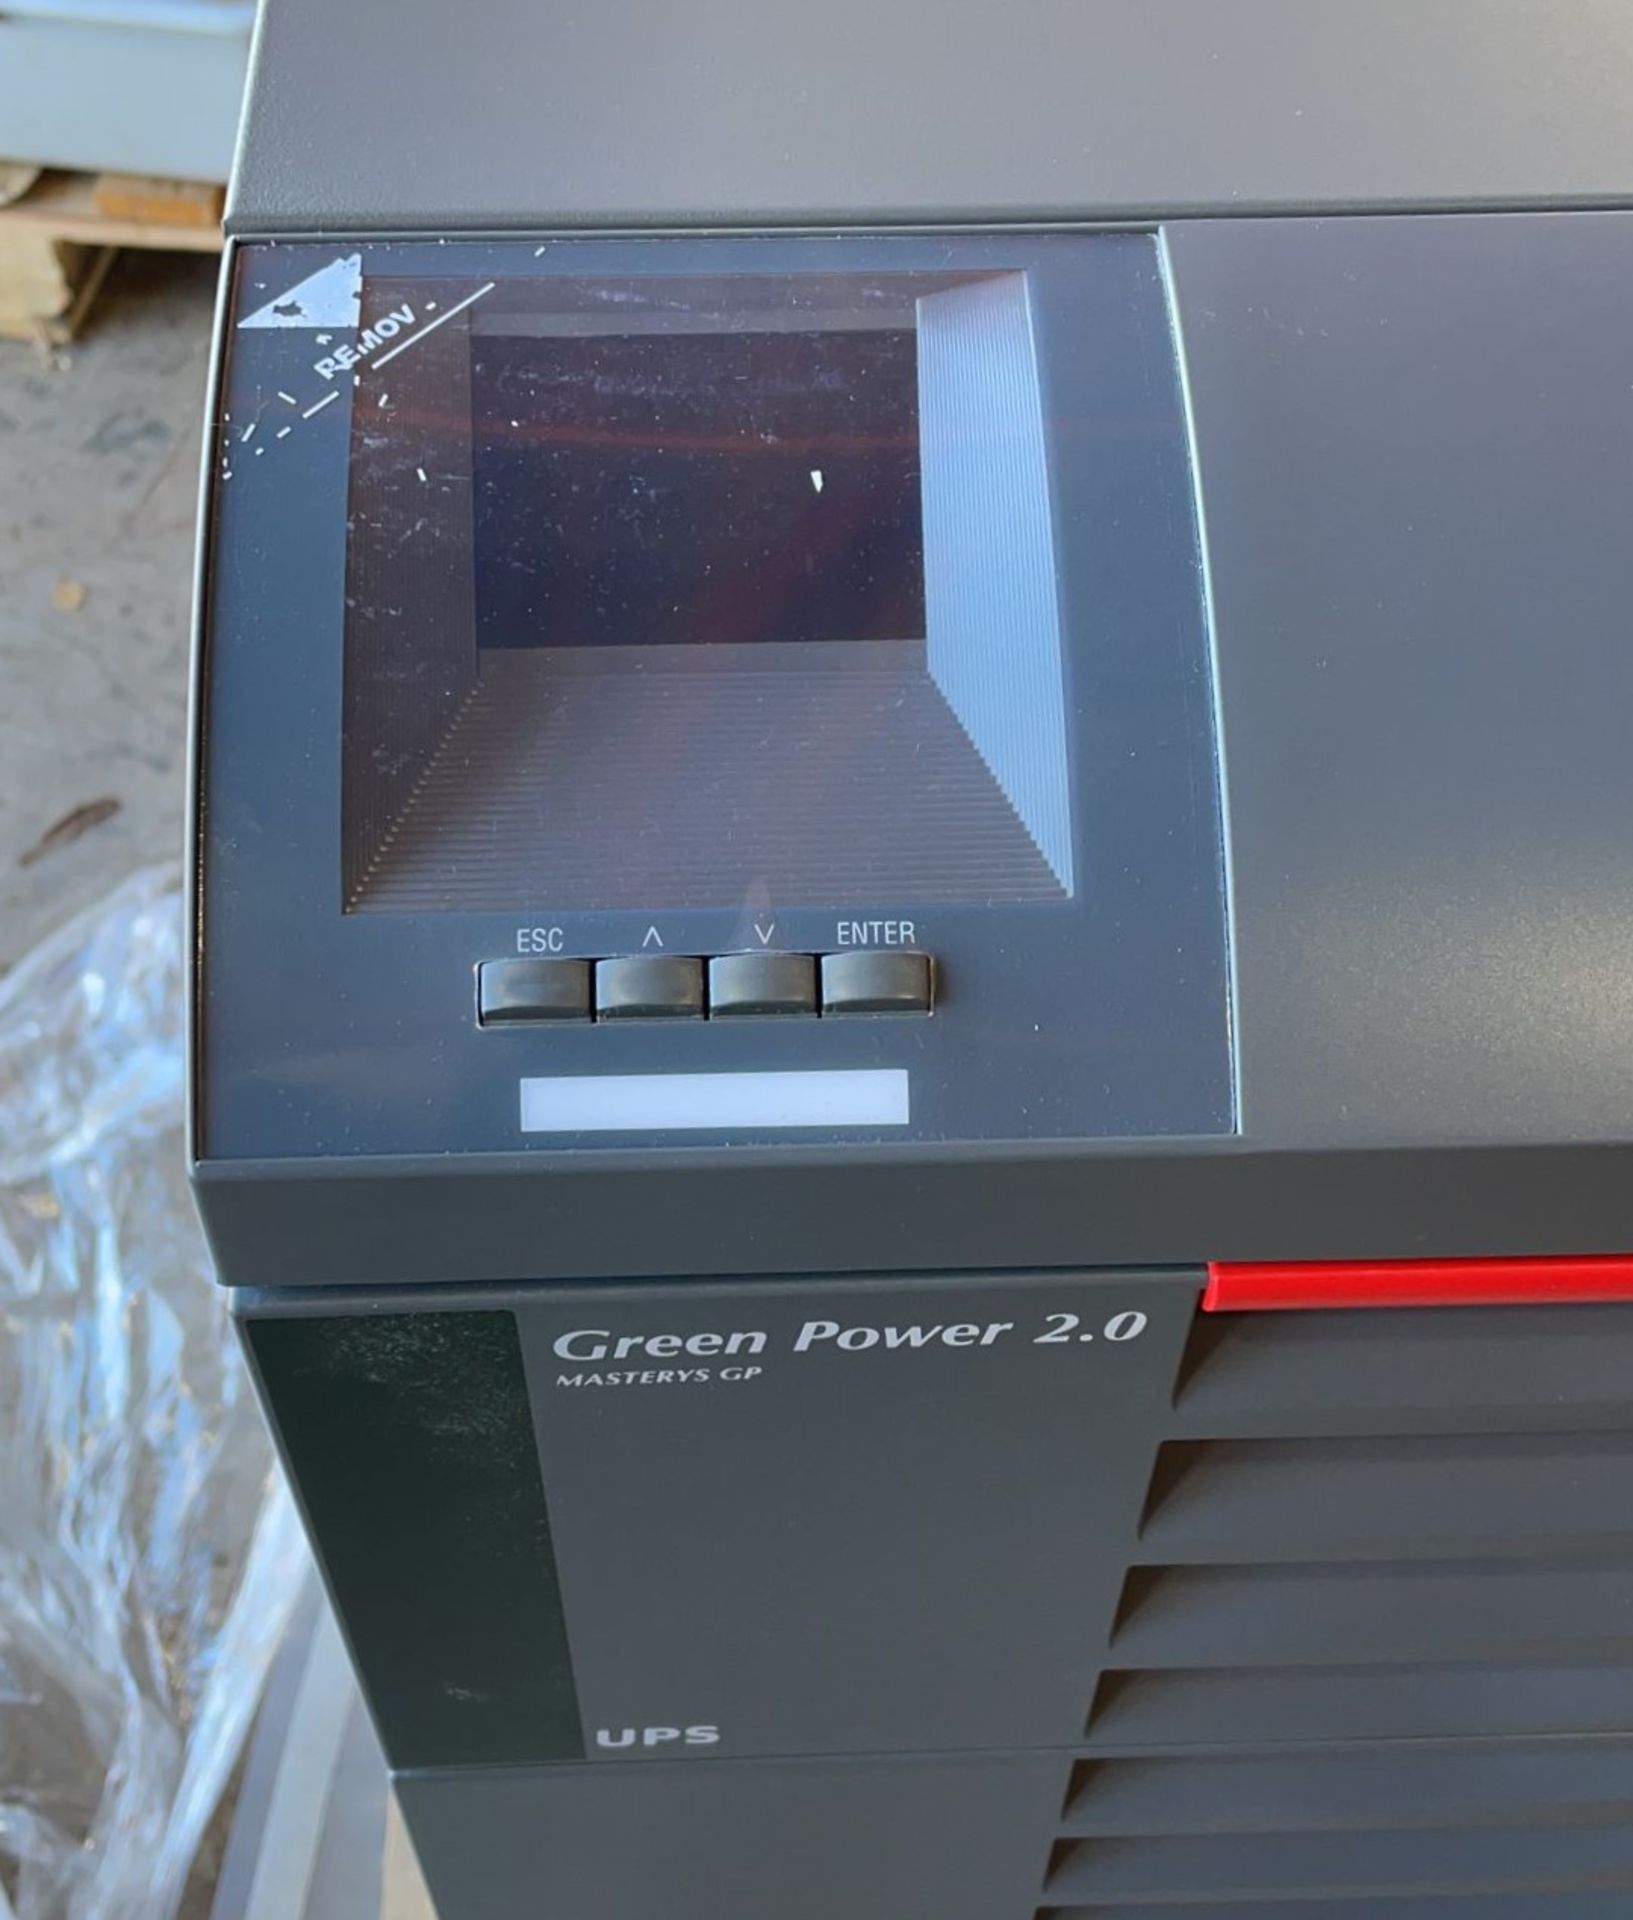 1 x Socomec Masterys GP Green Power 2.0 15KVA UPS Uninterruptible Power Supply - New and Unused - - Image 8 of 16